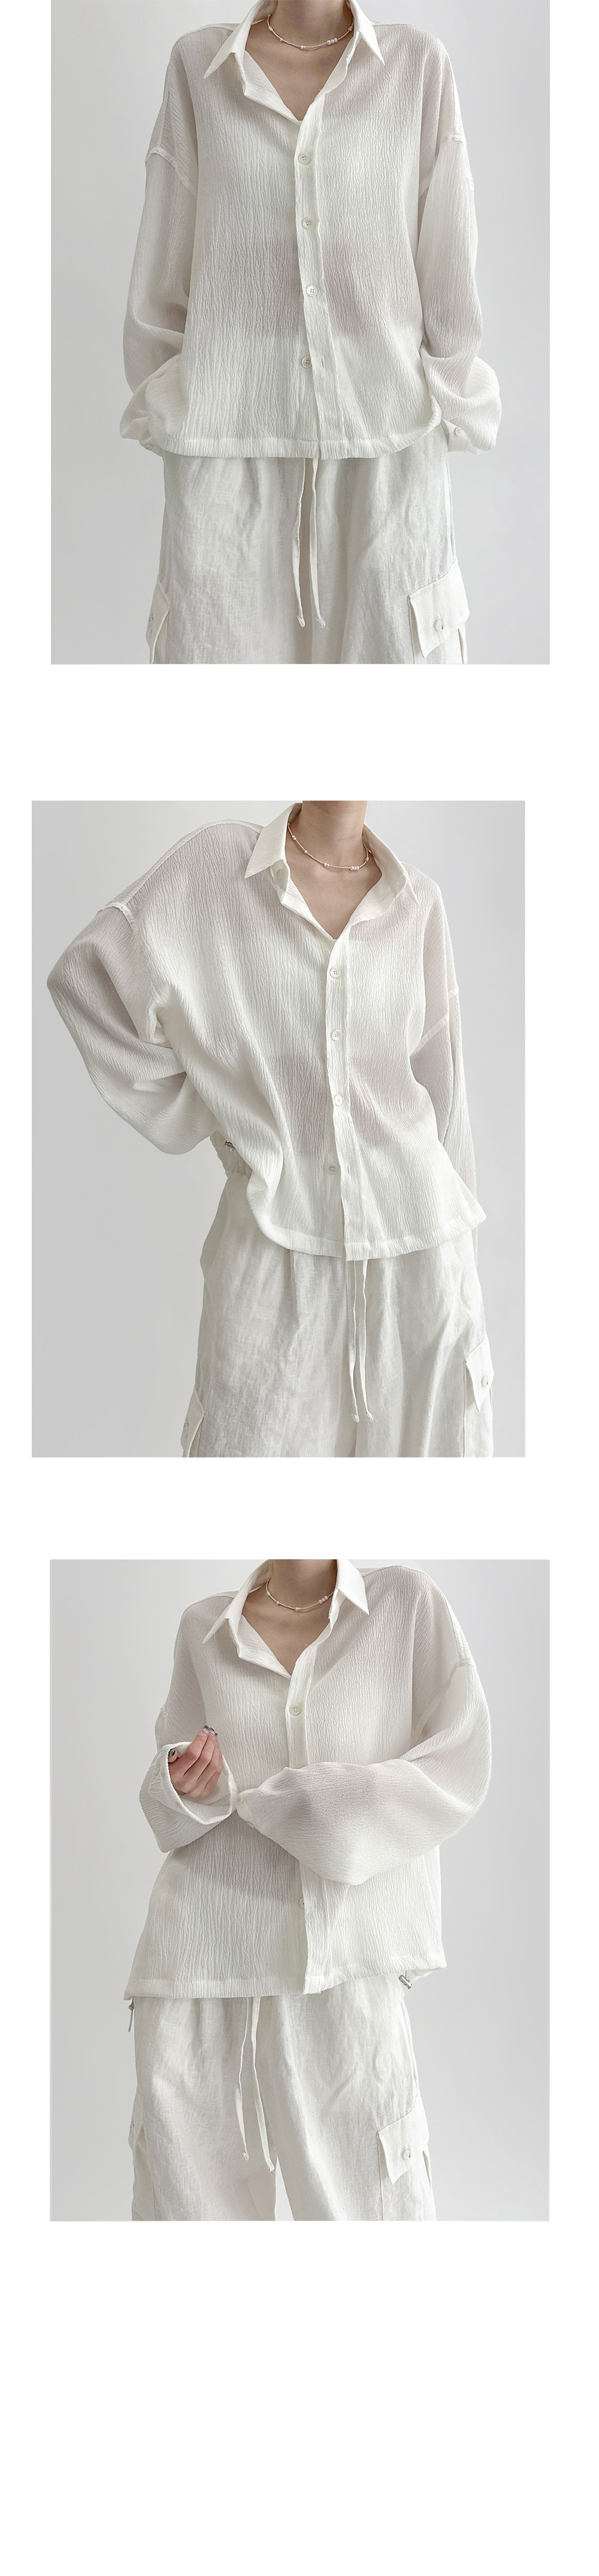 blouse cream color image-S1L14